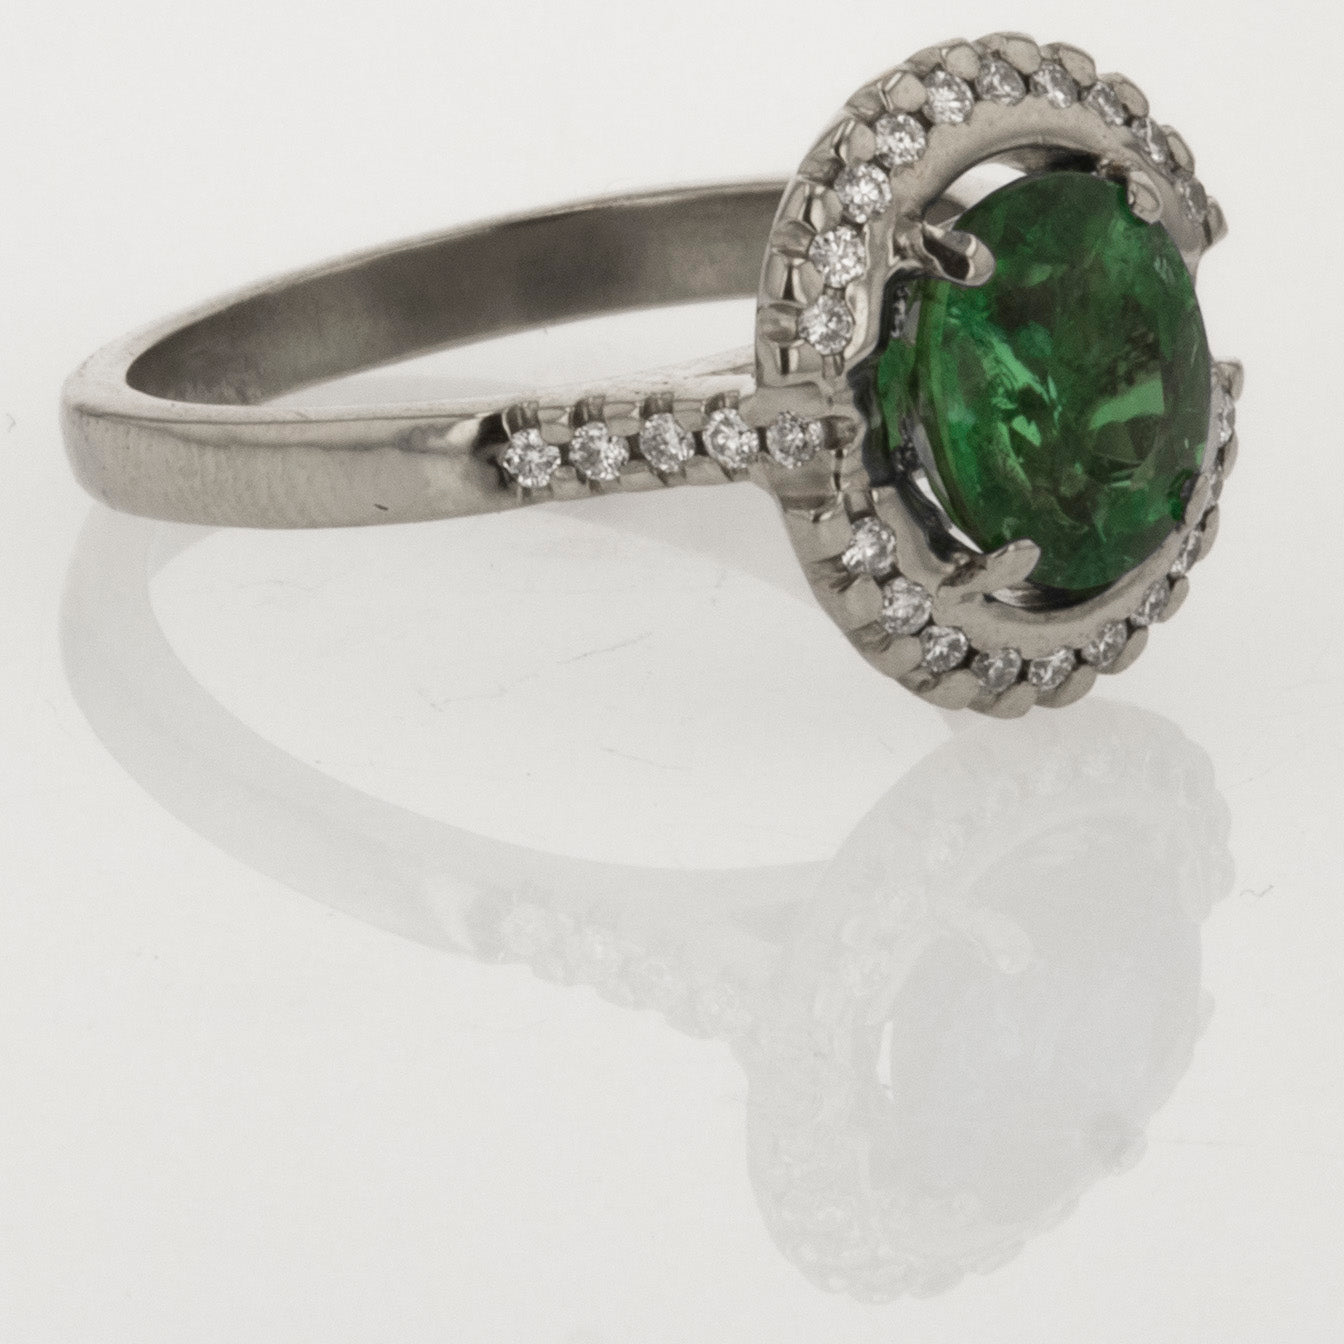 Green tourmaline engagement ring